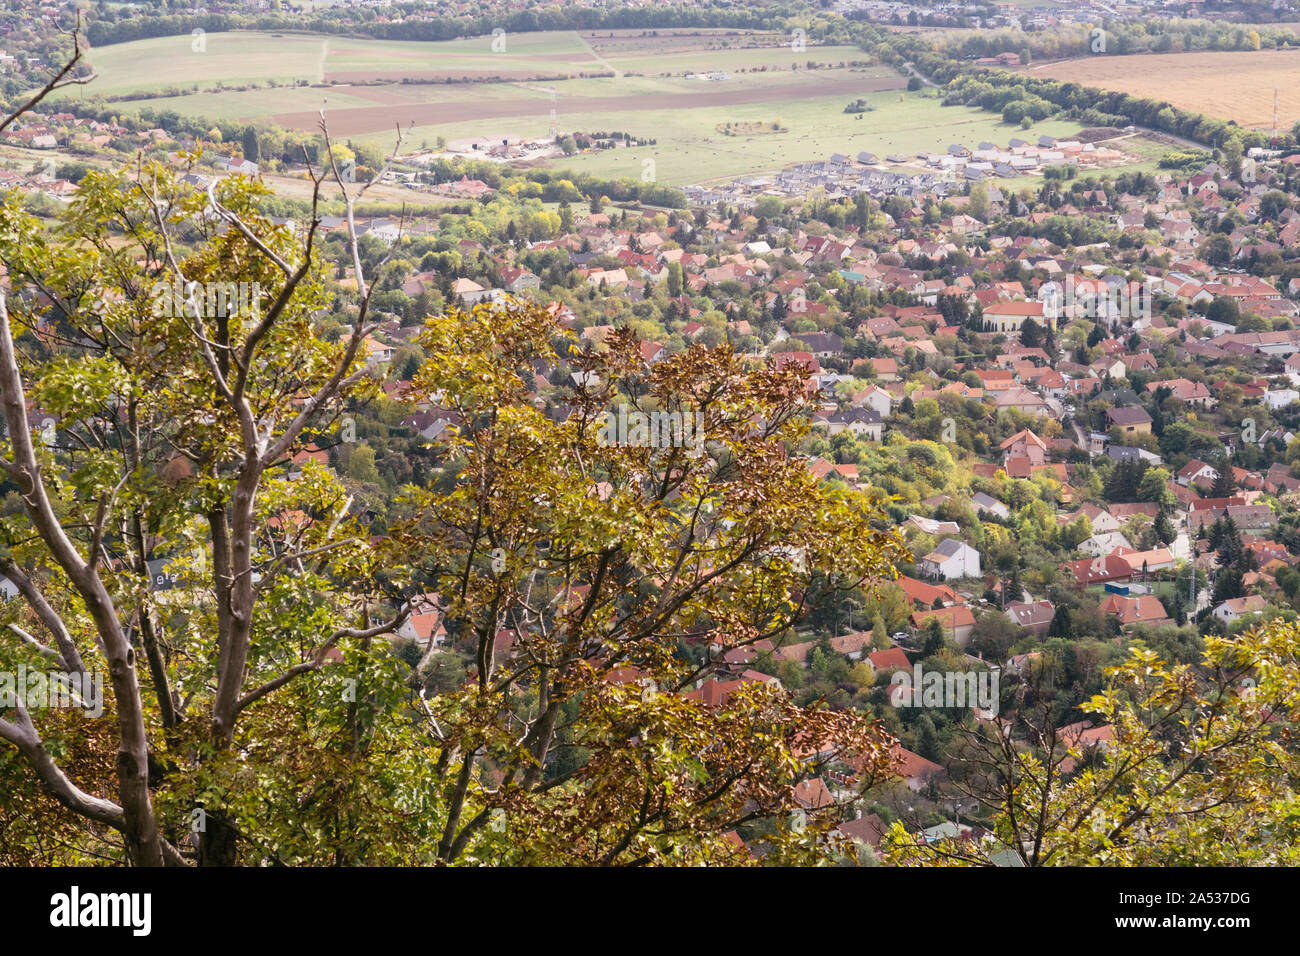 Pilisborosjeno, Hungary - Oct 11, 2019: View of Pilisborosjeno at autumn, a small picturesque village in the Pilis Mountains is a mountainous region i Stock Photo